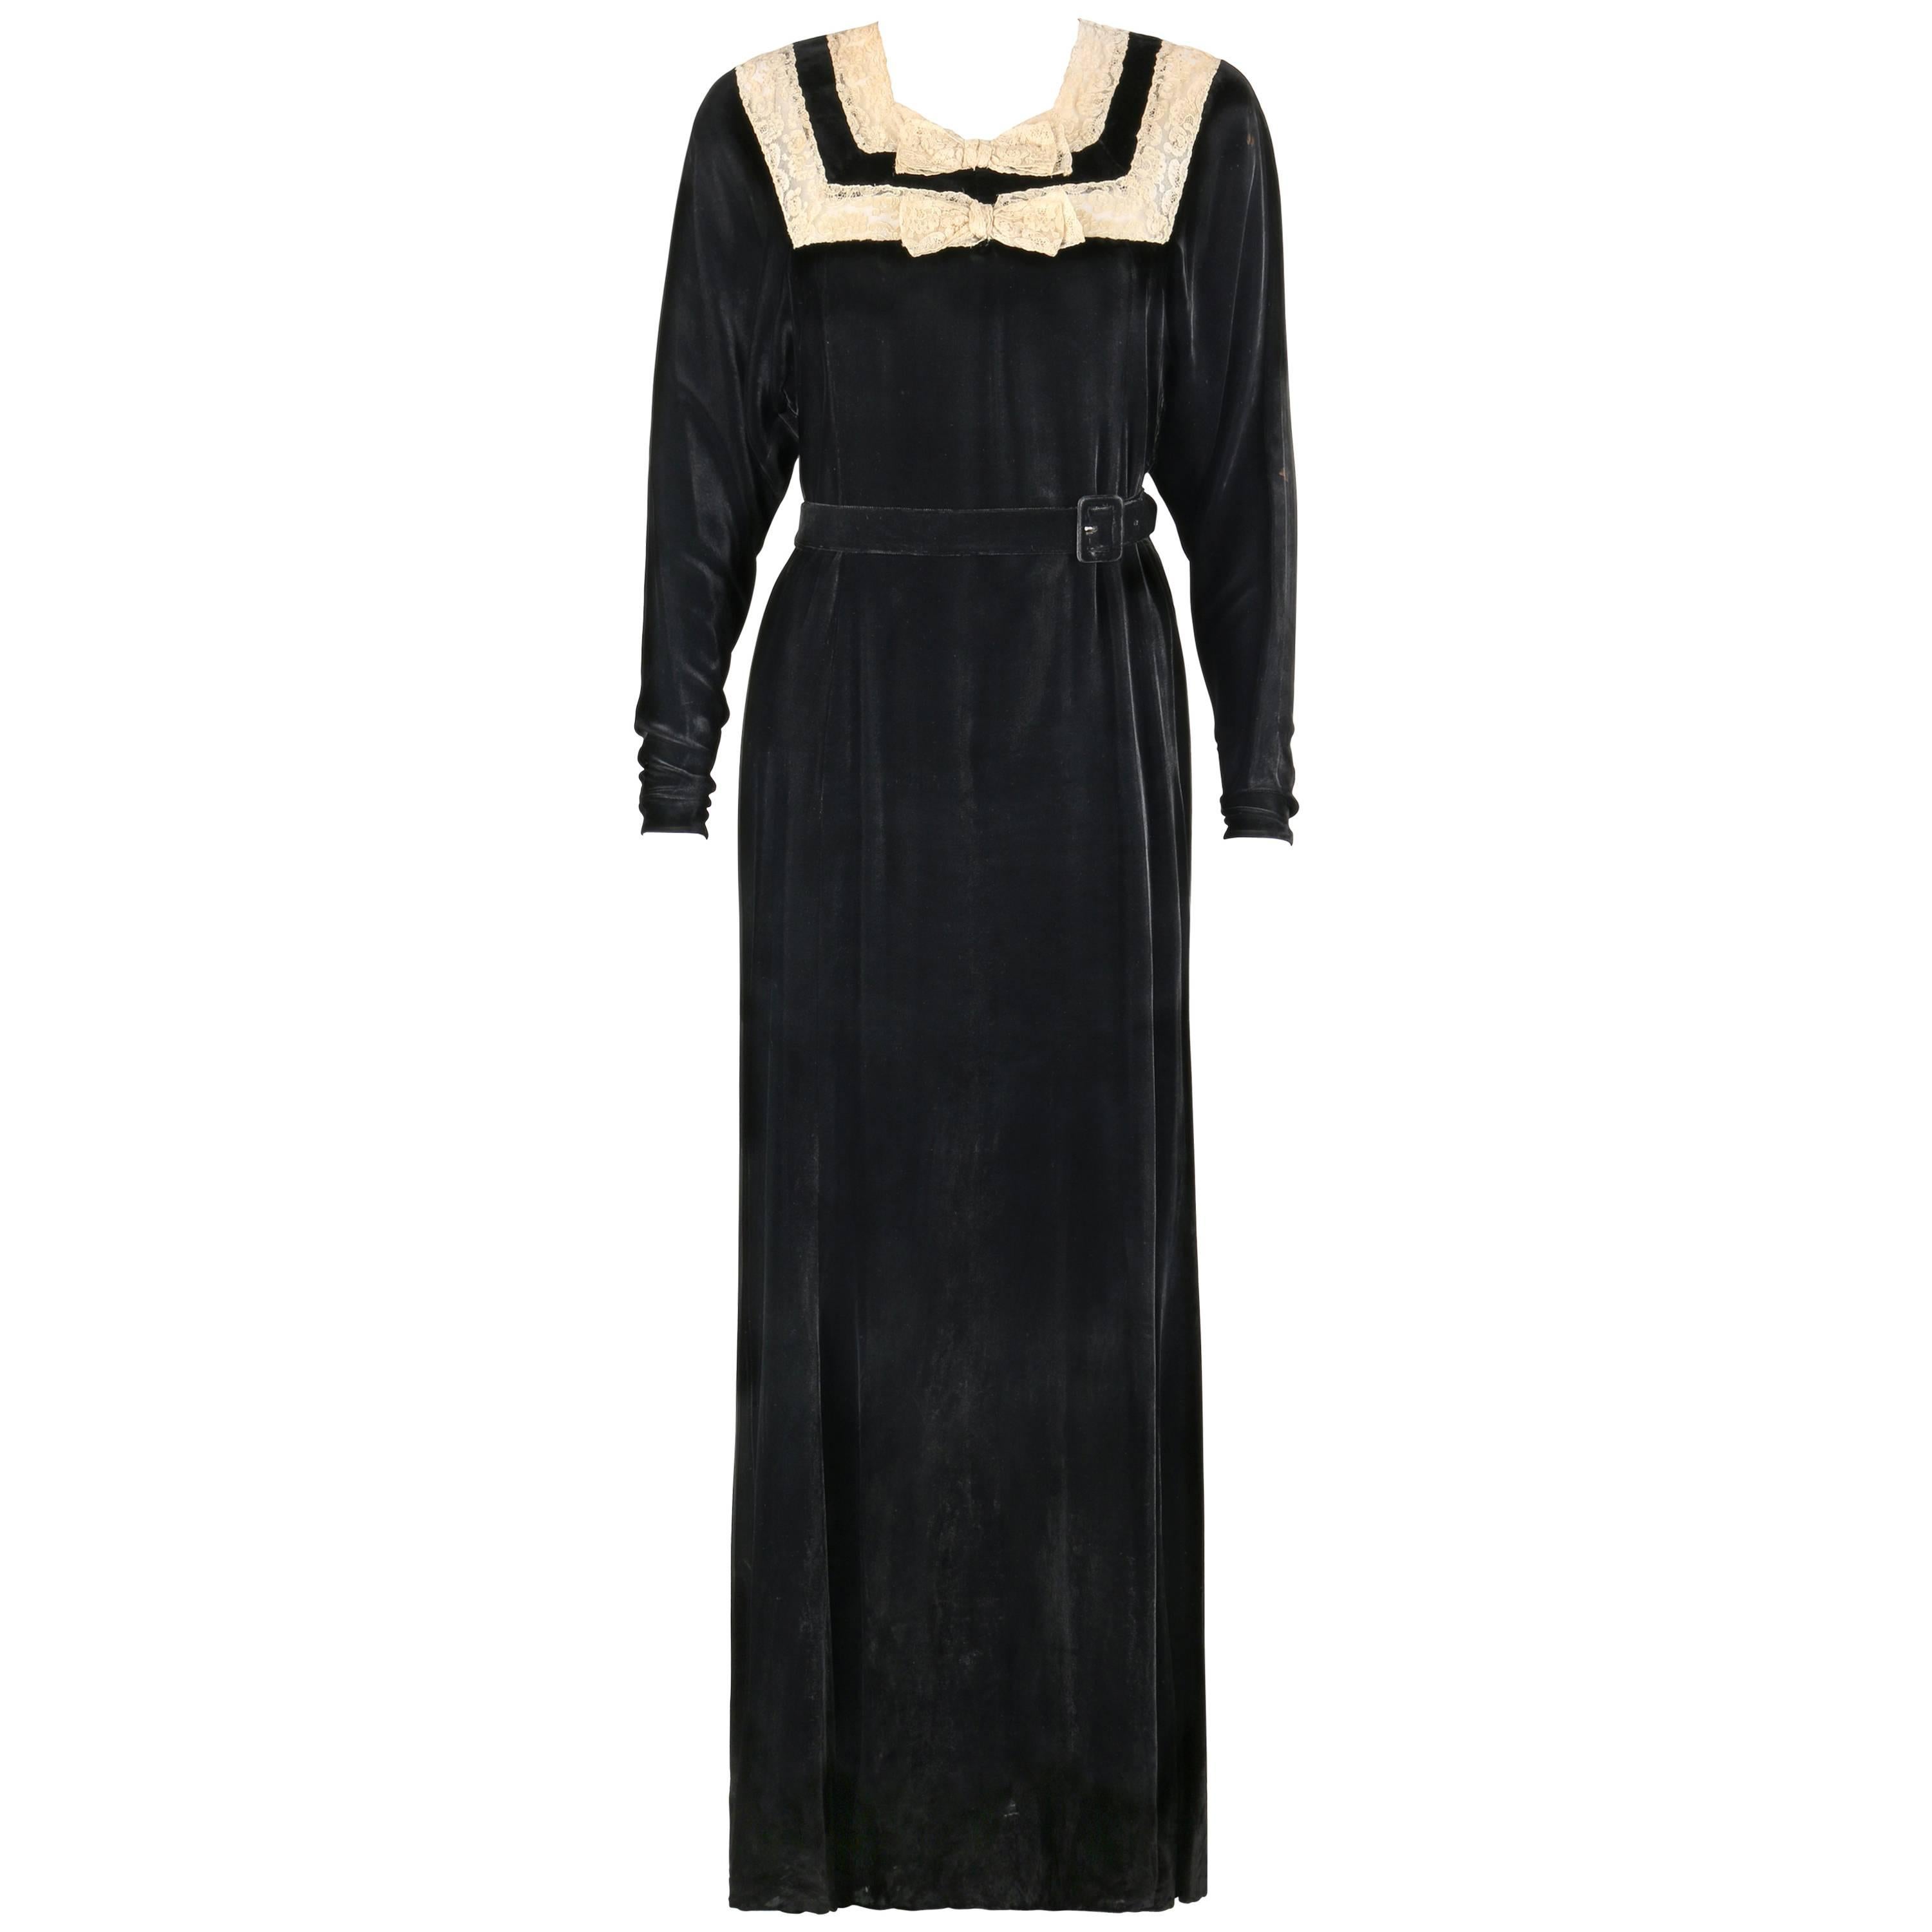 GERMAINE MONTEIL c.1930s Black Silk Velvet Belted Floral Lace Evening Dress Gown For Sale